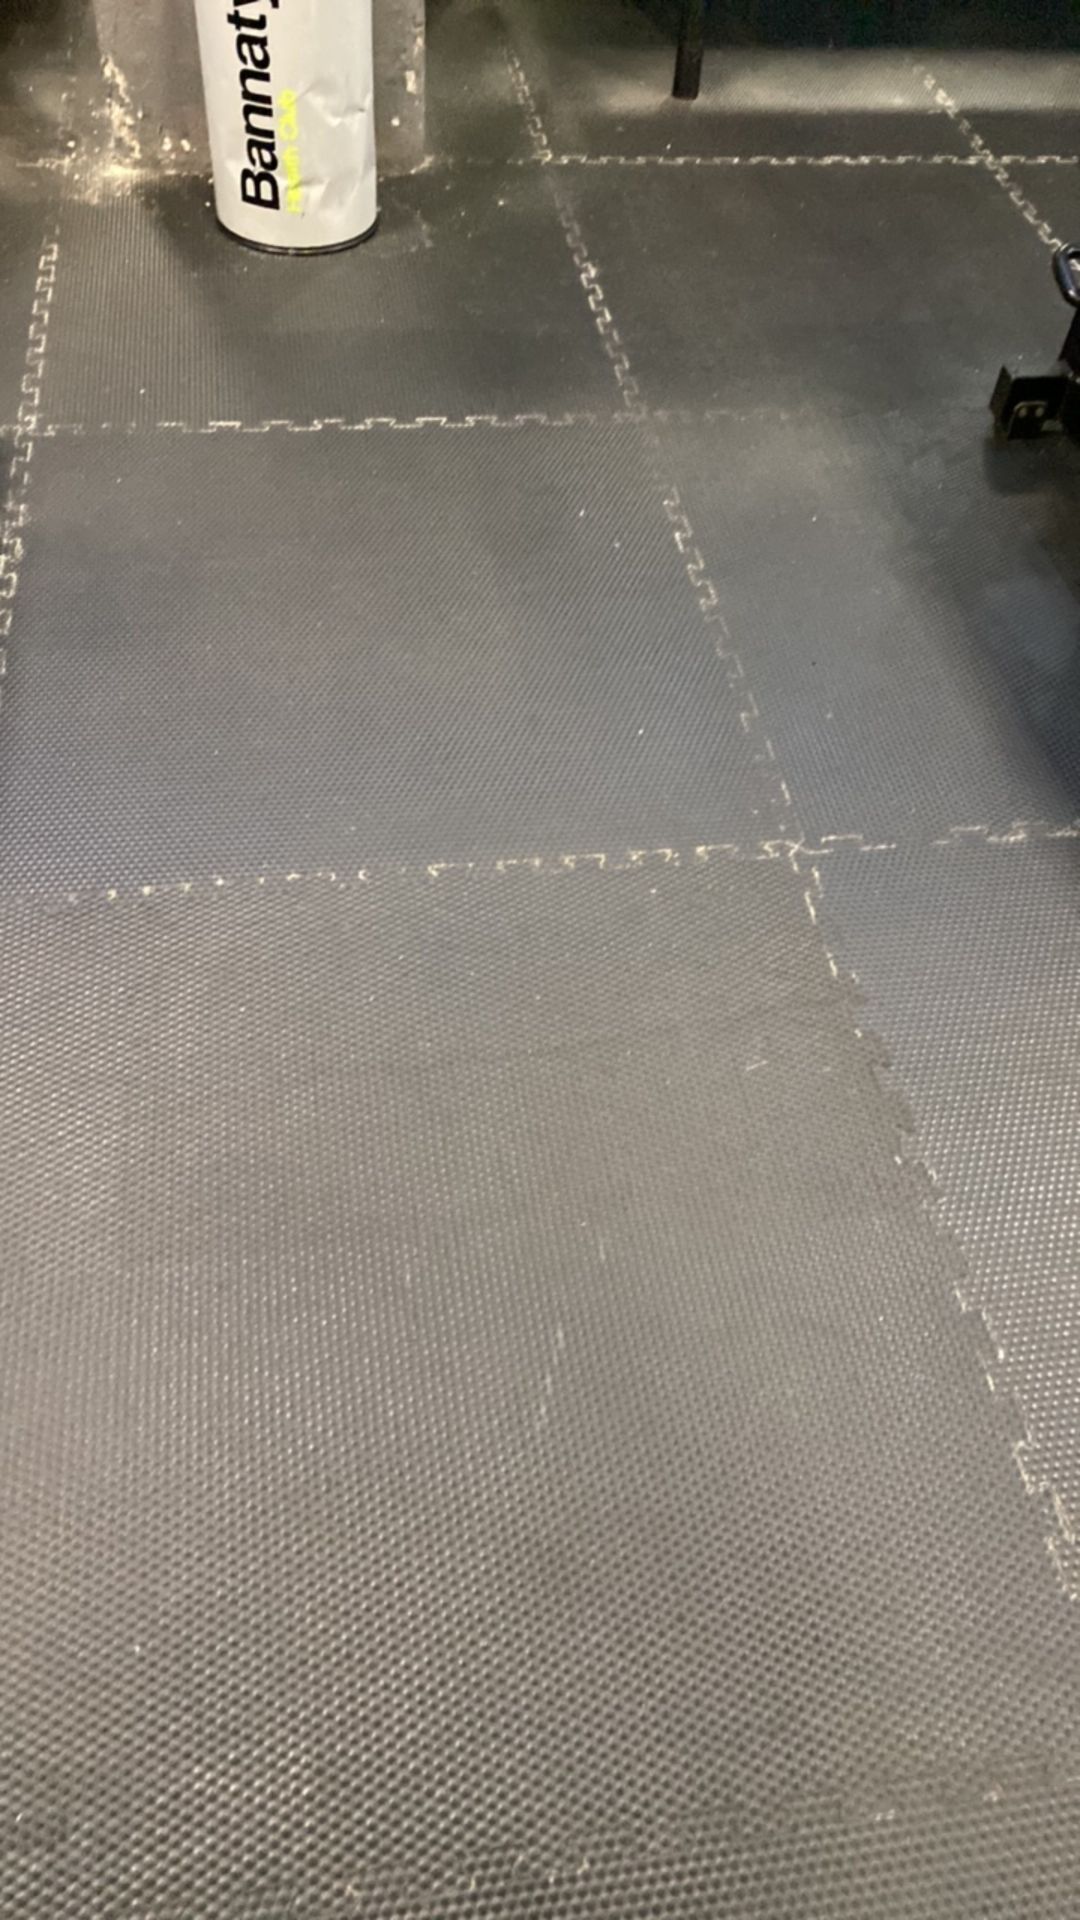 10x Gym matt flooring tiles - Image 4 of 4